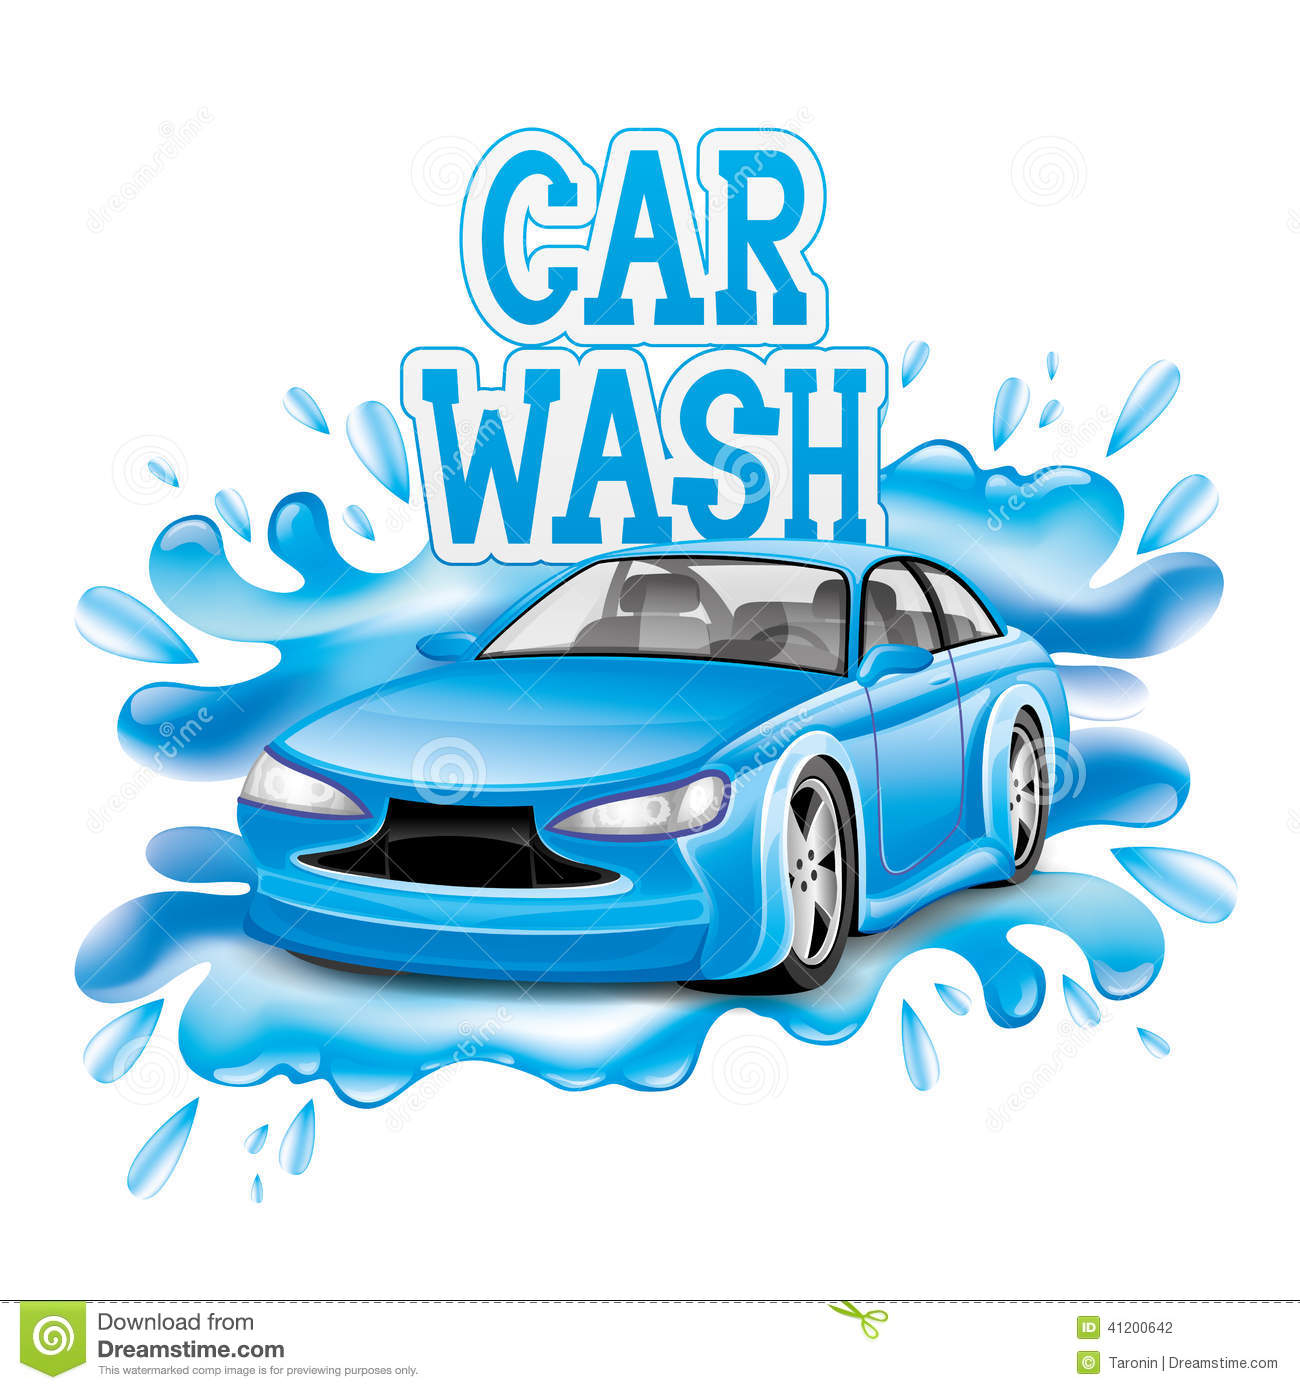 Free Car Wash Images.